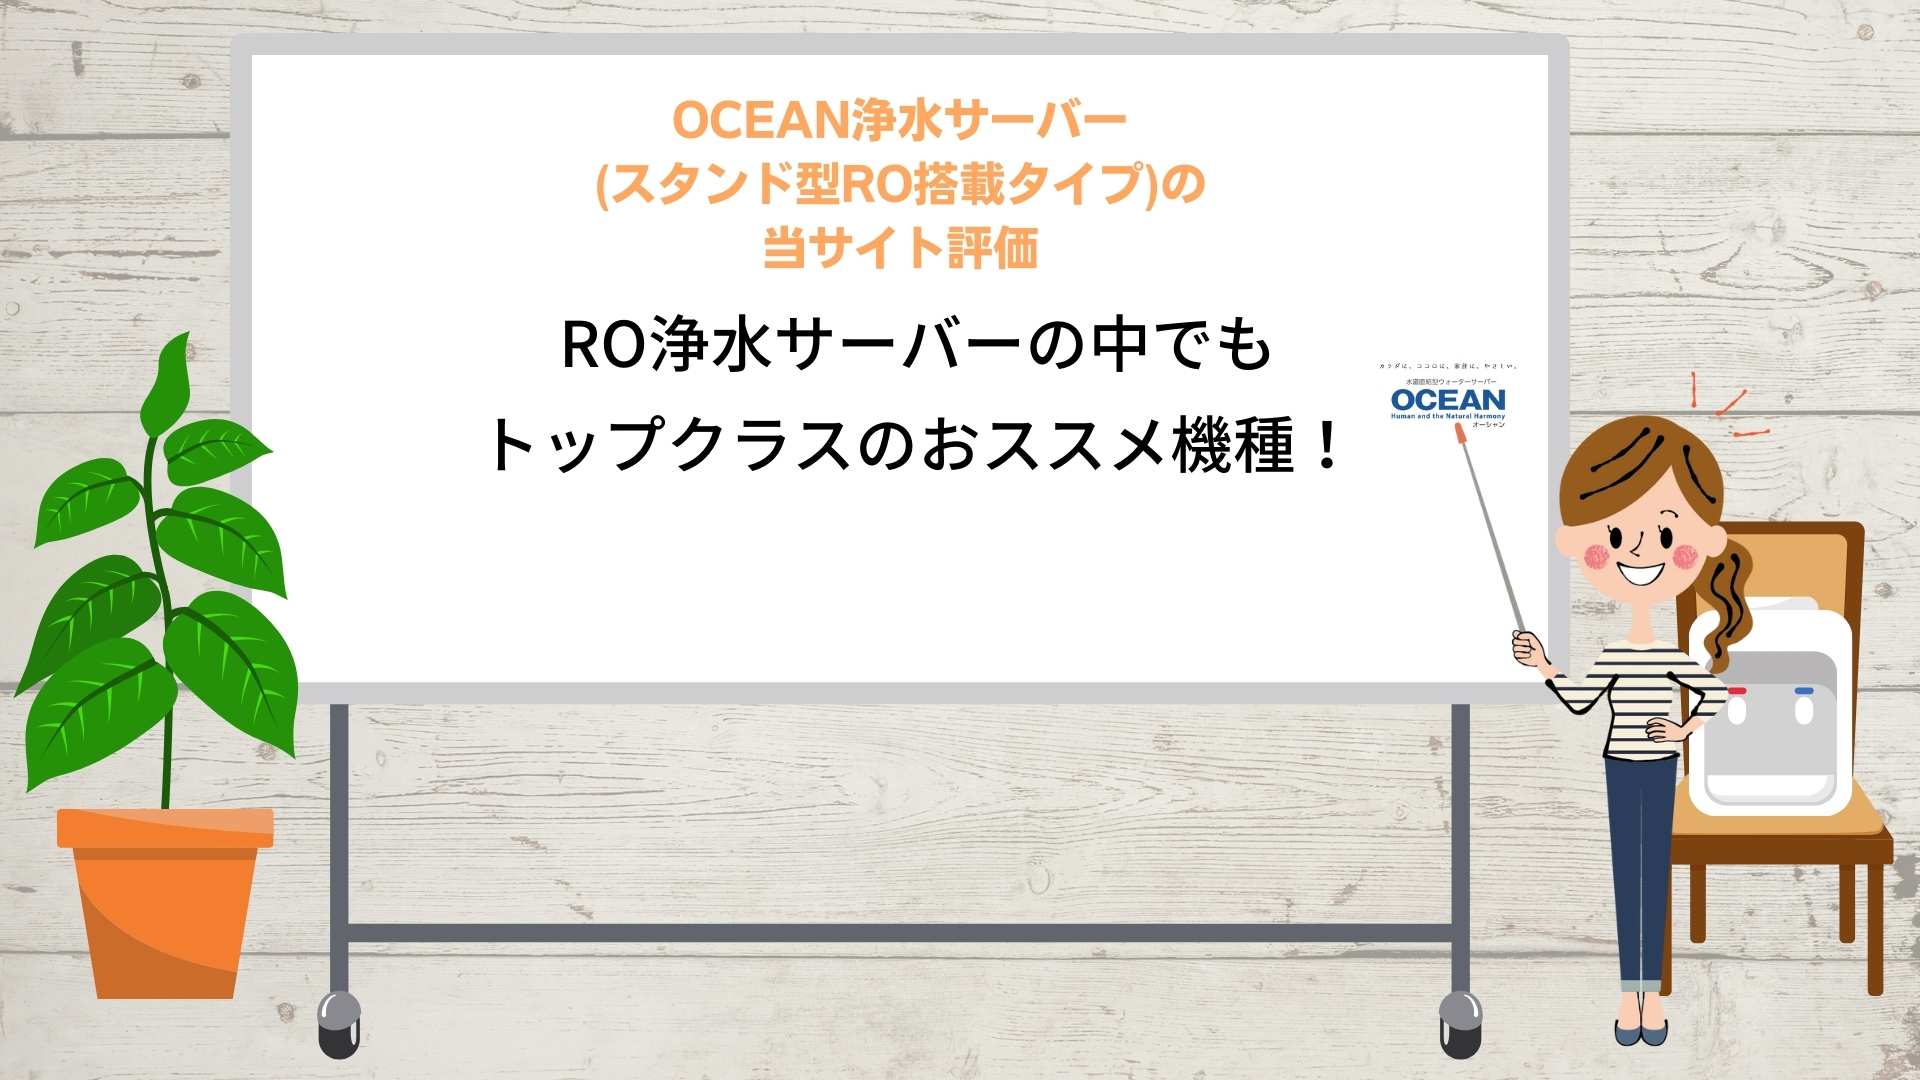 OCEAN浄水サーバー(スタンド型ROタイプ)の当サイト評価